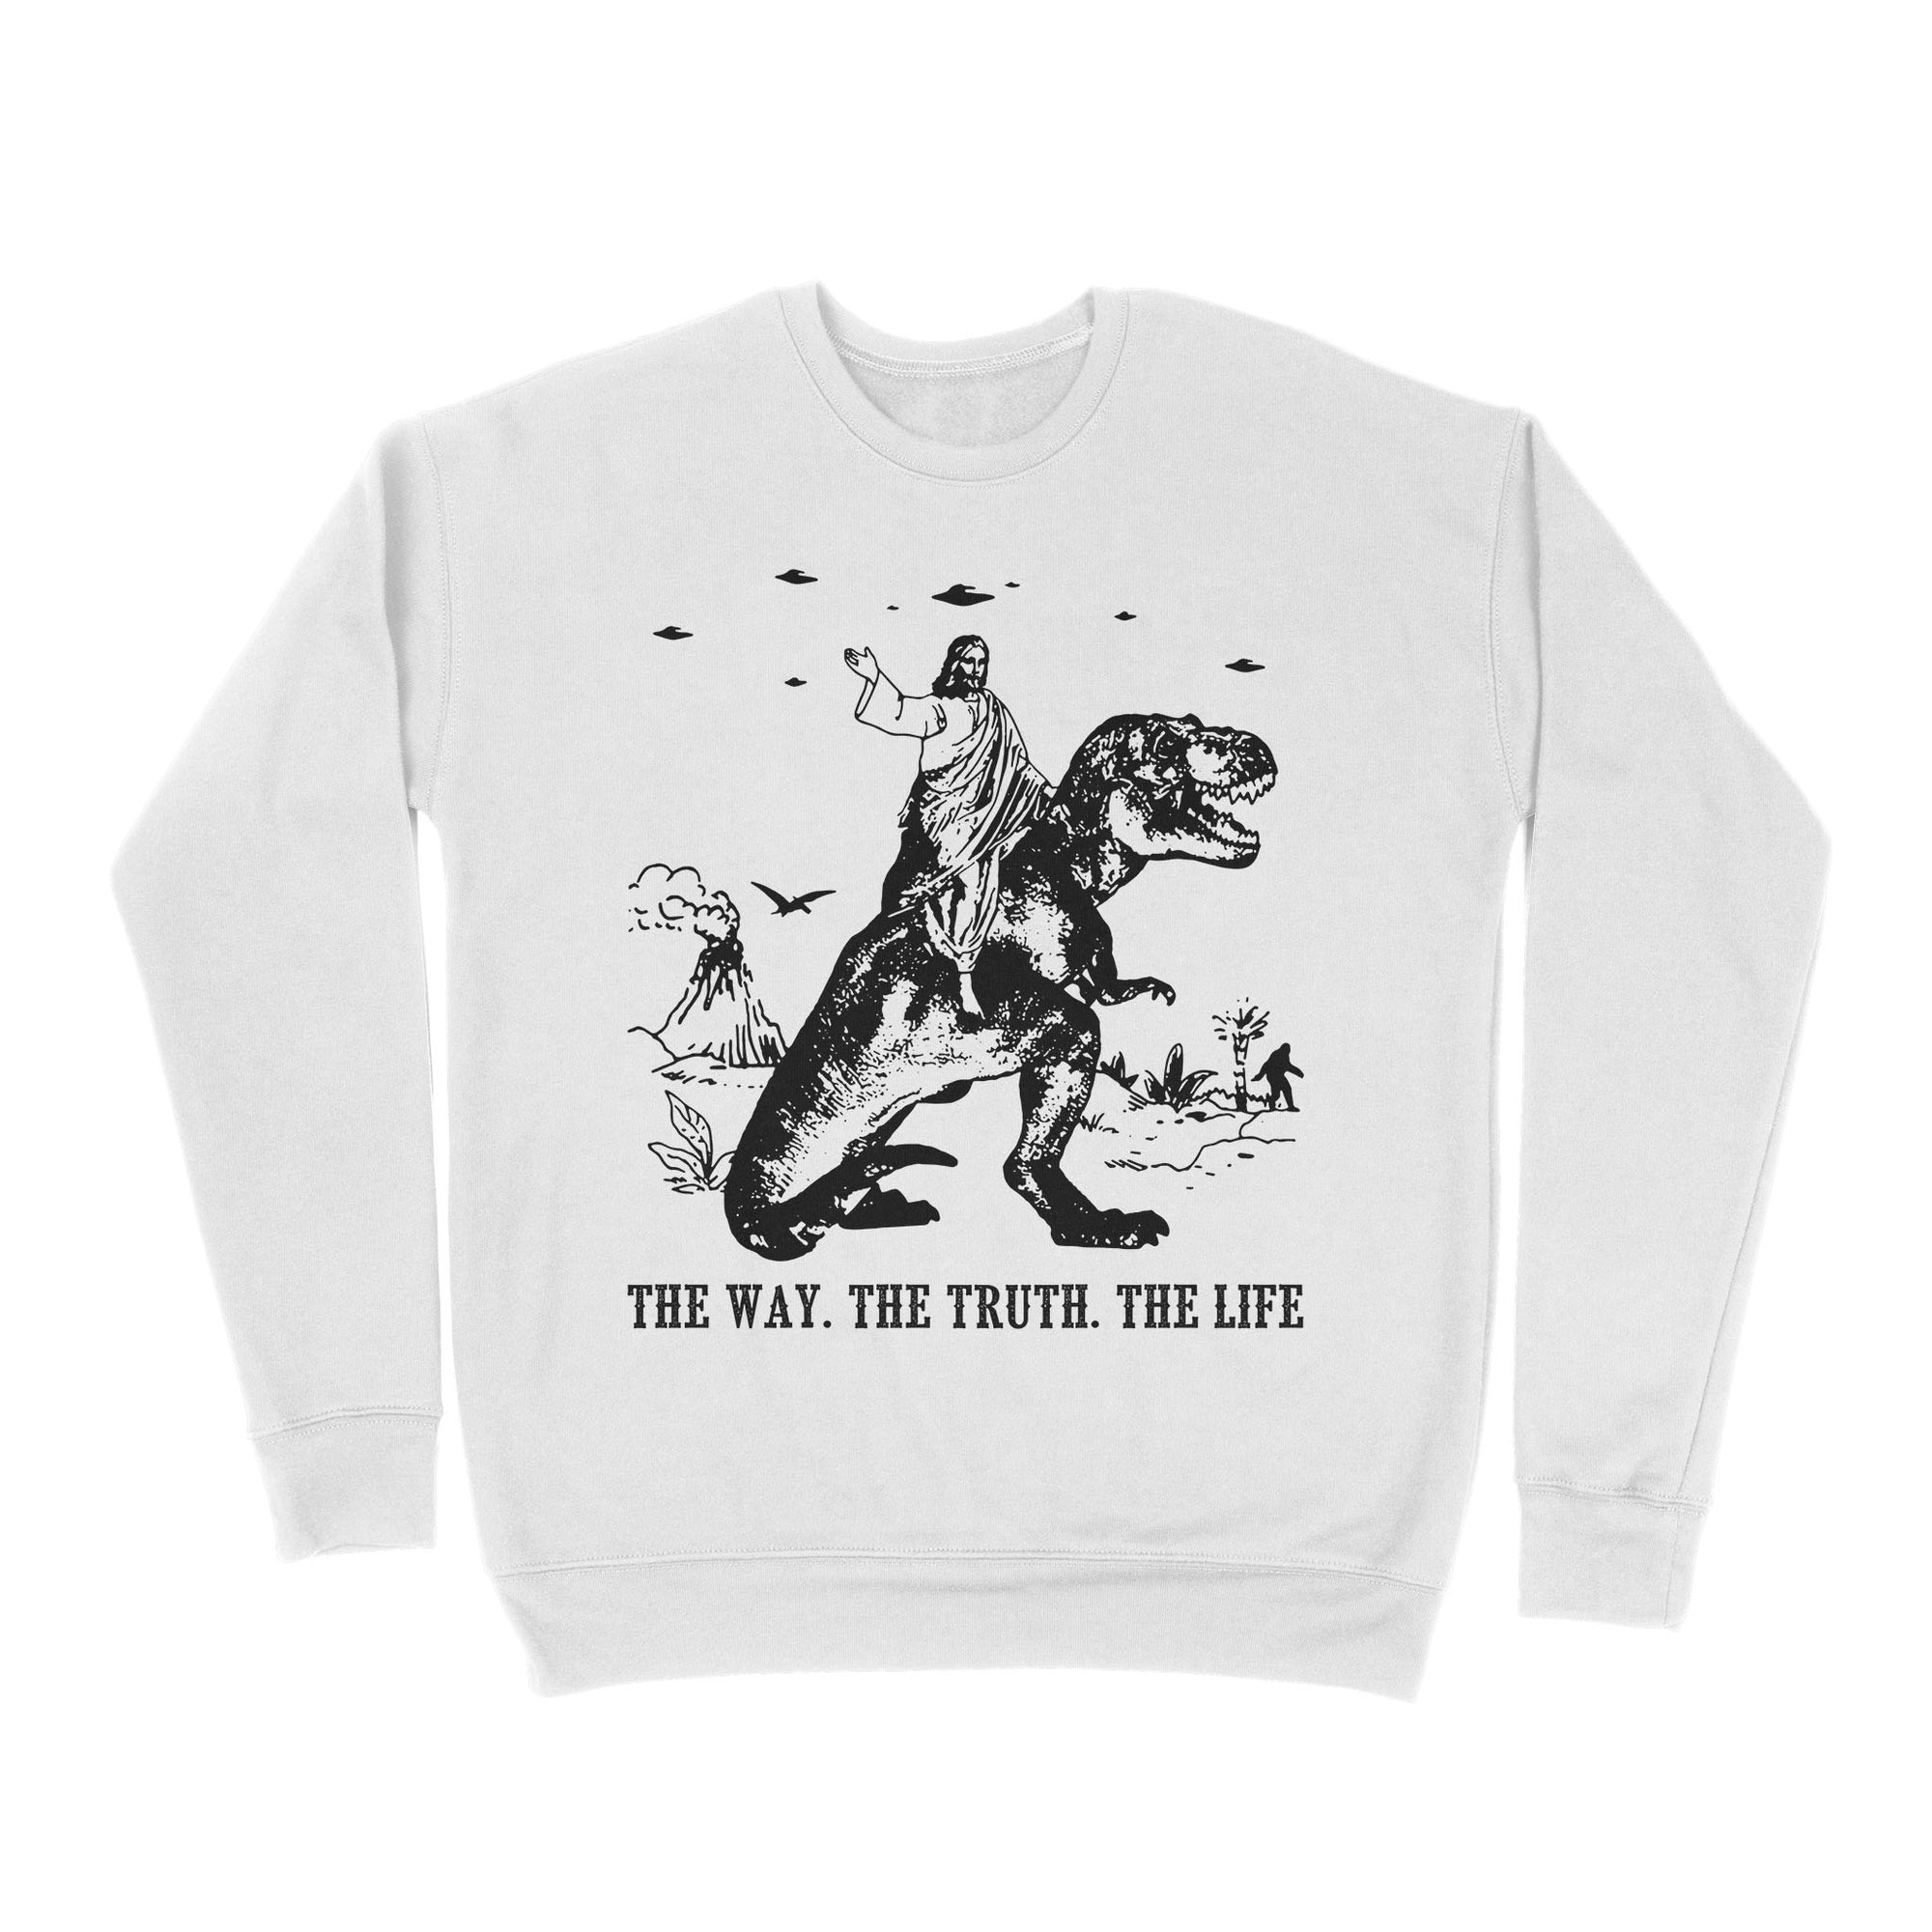 Premium Crew Neck Sweatshirt - Jesus Riding Dinosaur The Way. The Truth. The Life